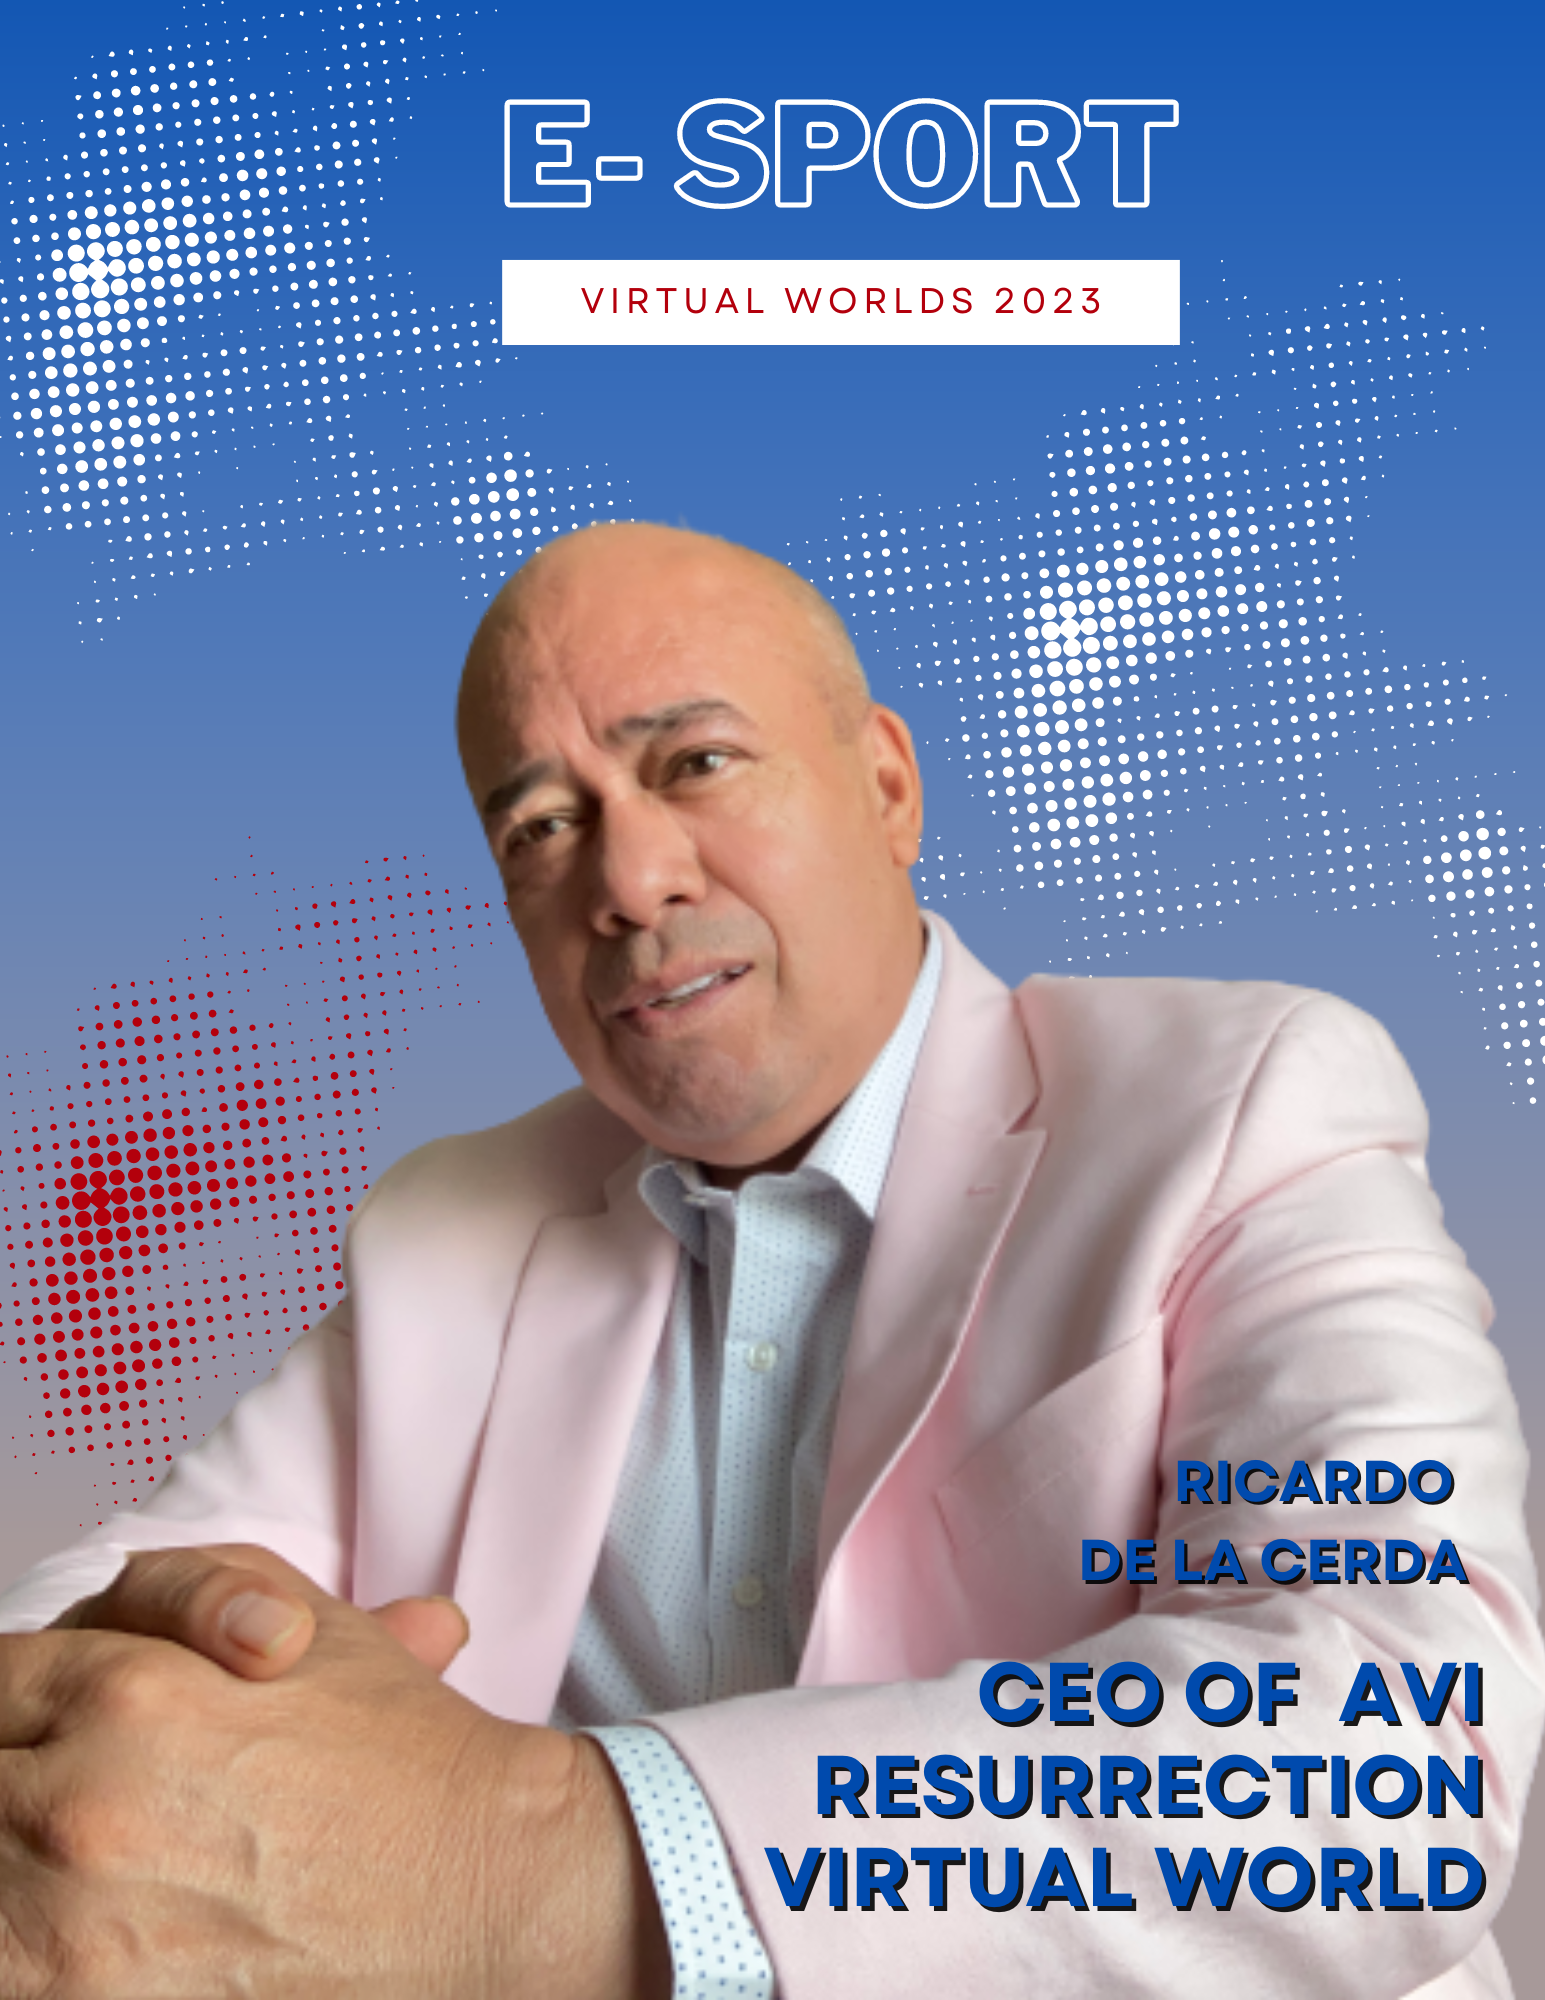 Ricardo De La Cerda, Gives a Big Boost to Opensim Virtual Worlds in a media Interview.